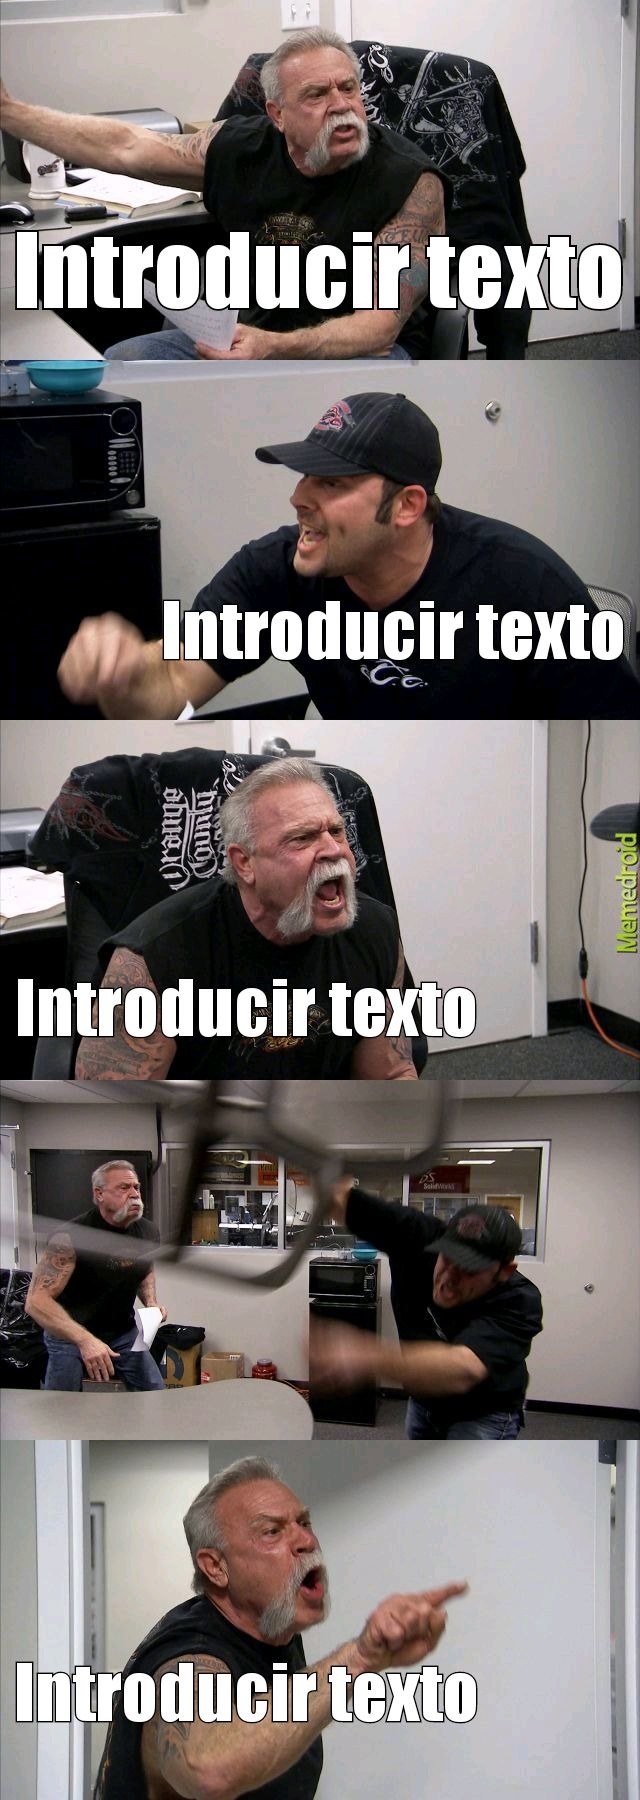 Introducir texto - meme